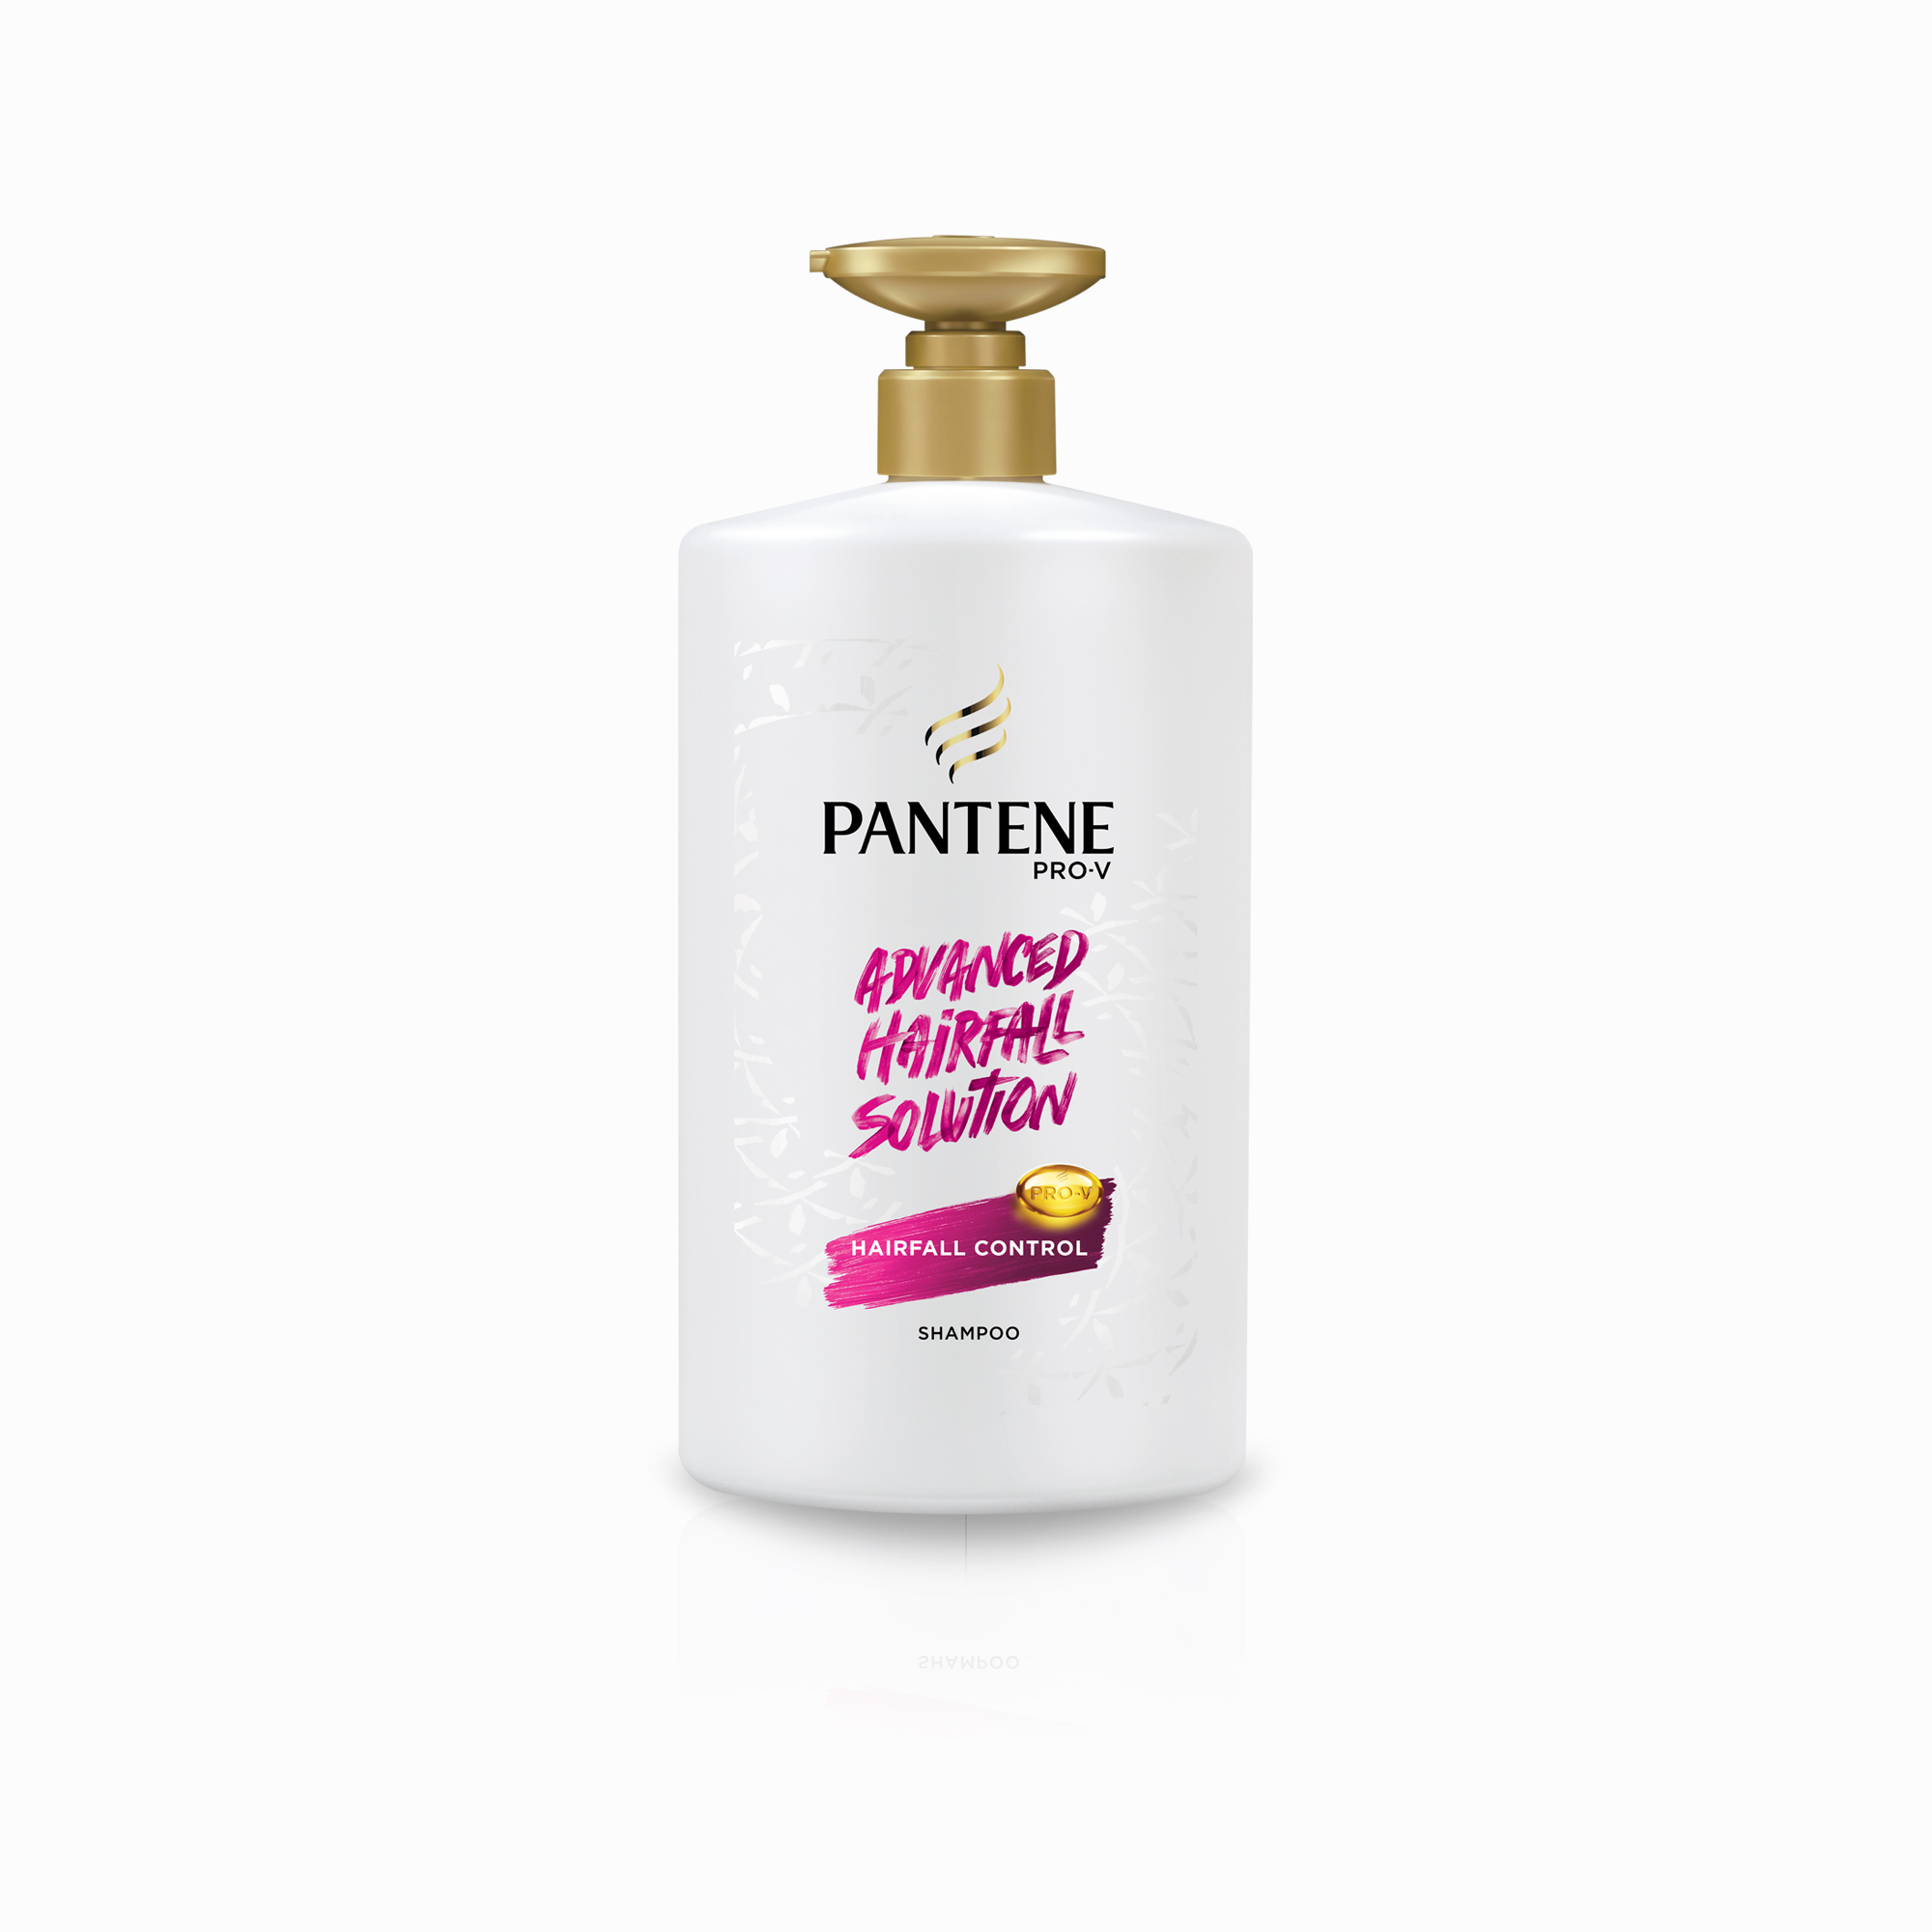 Pantene Advanced Hair Fall Solution Shampoo